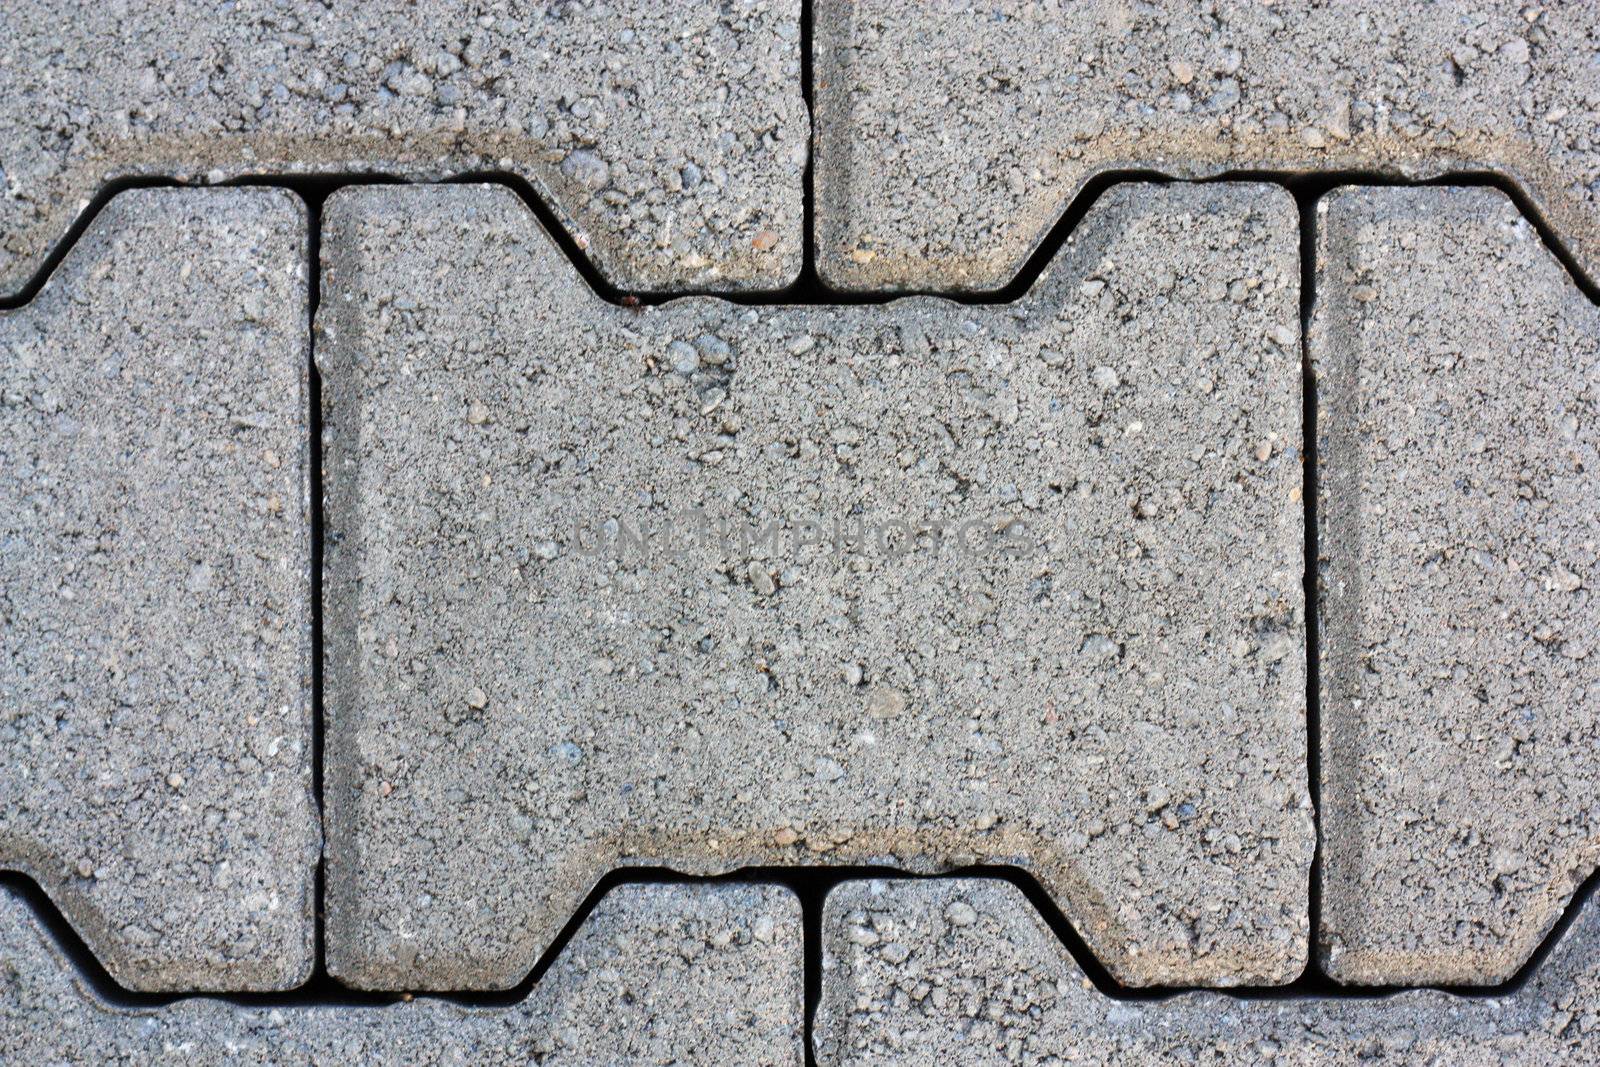 Connection of figured bricks